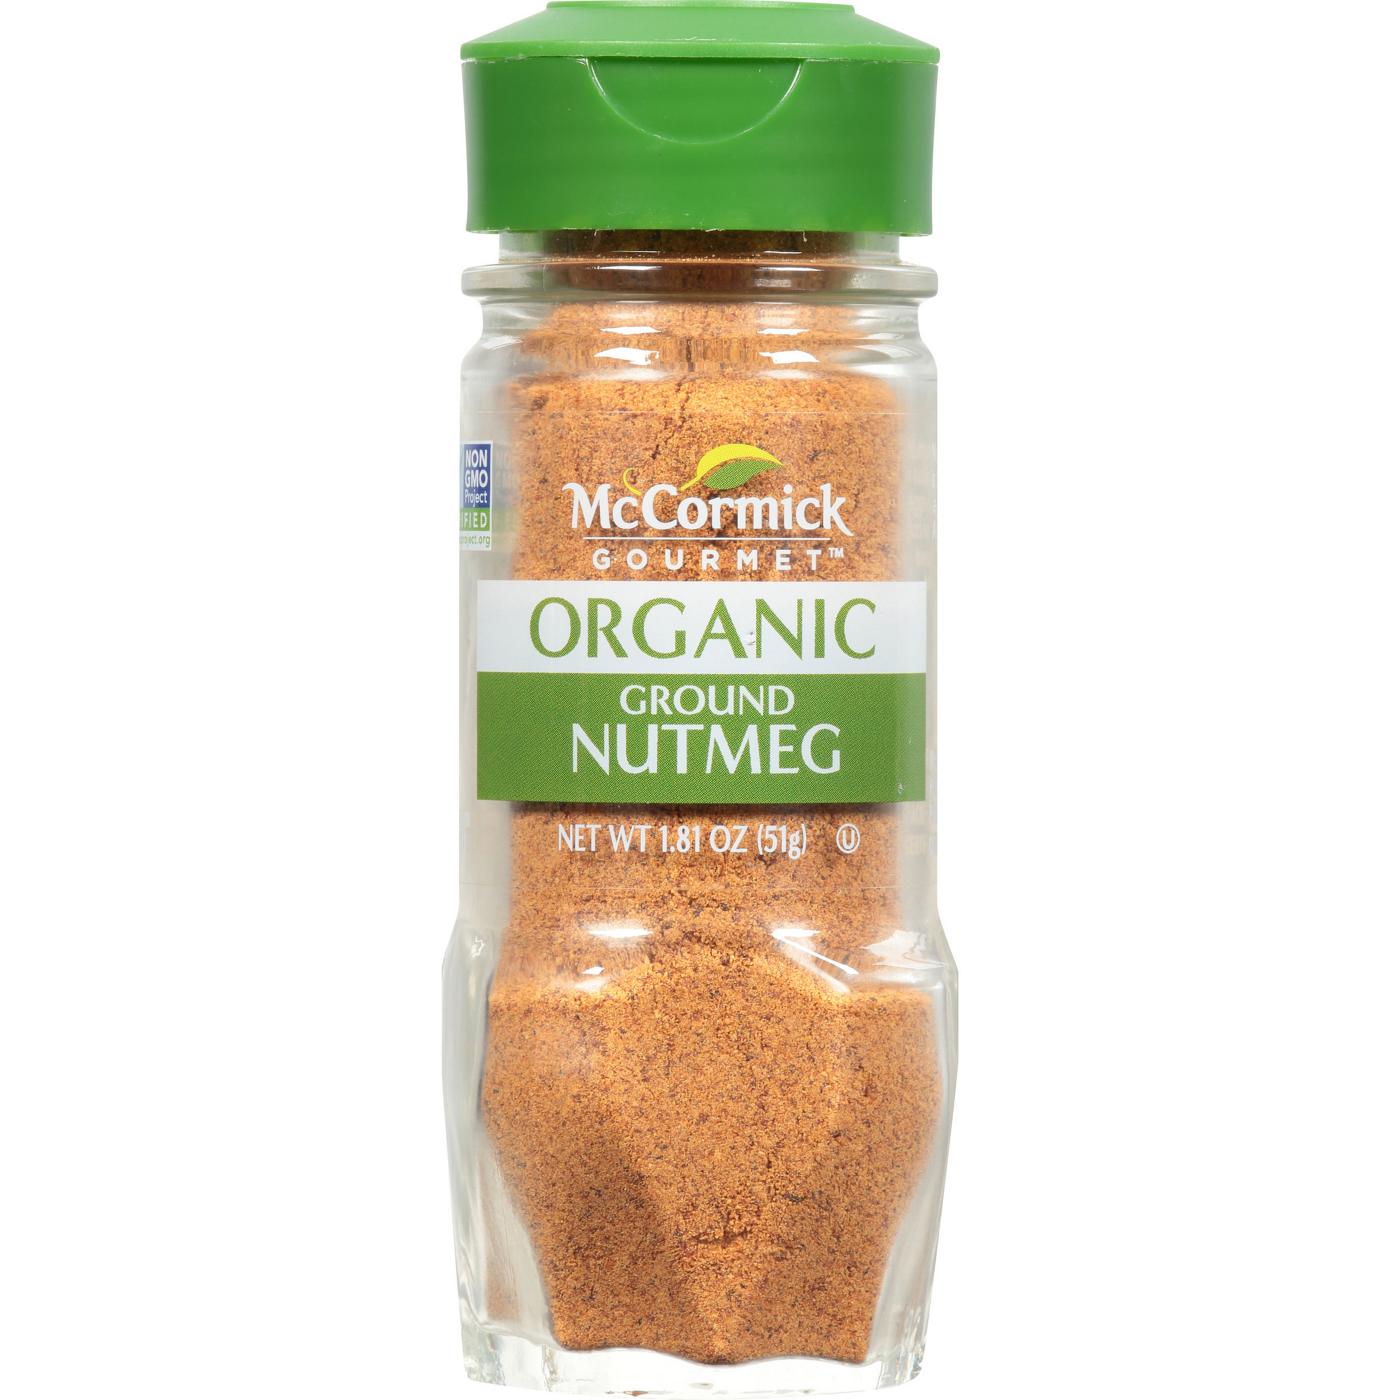 McCormick Organic Ground Nutmeg; image 1 of 7